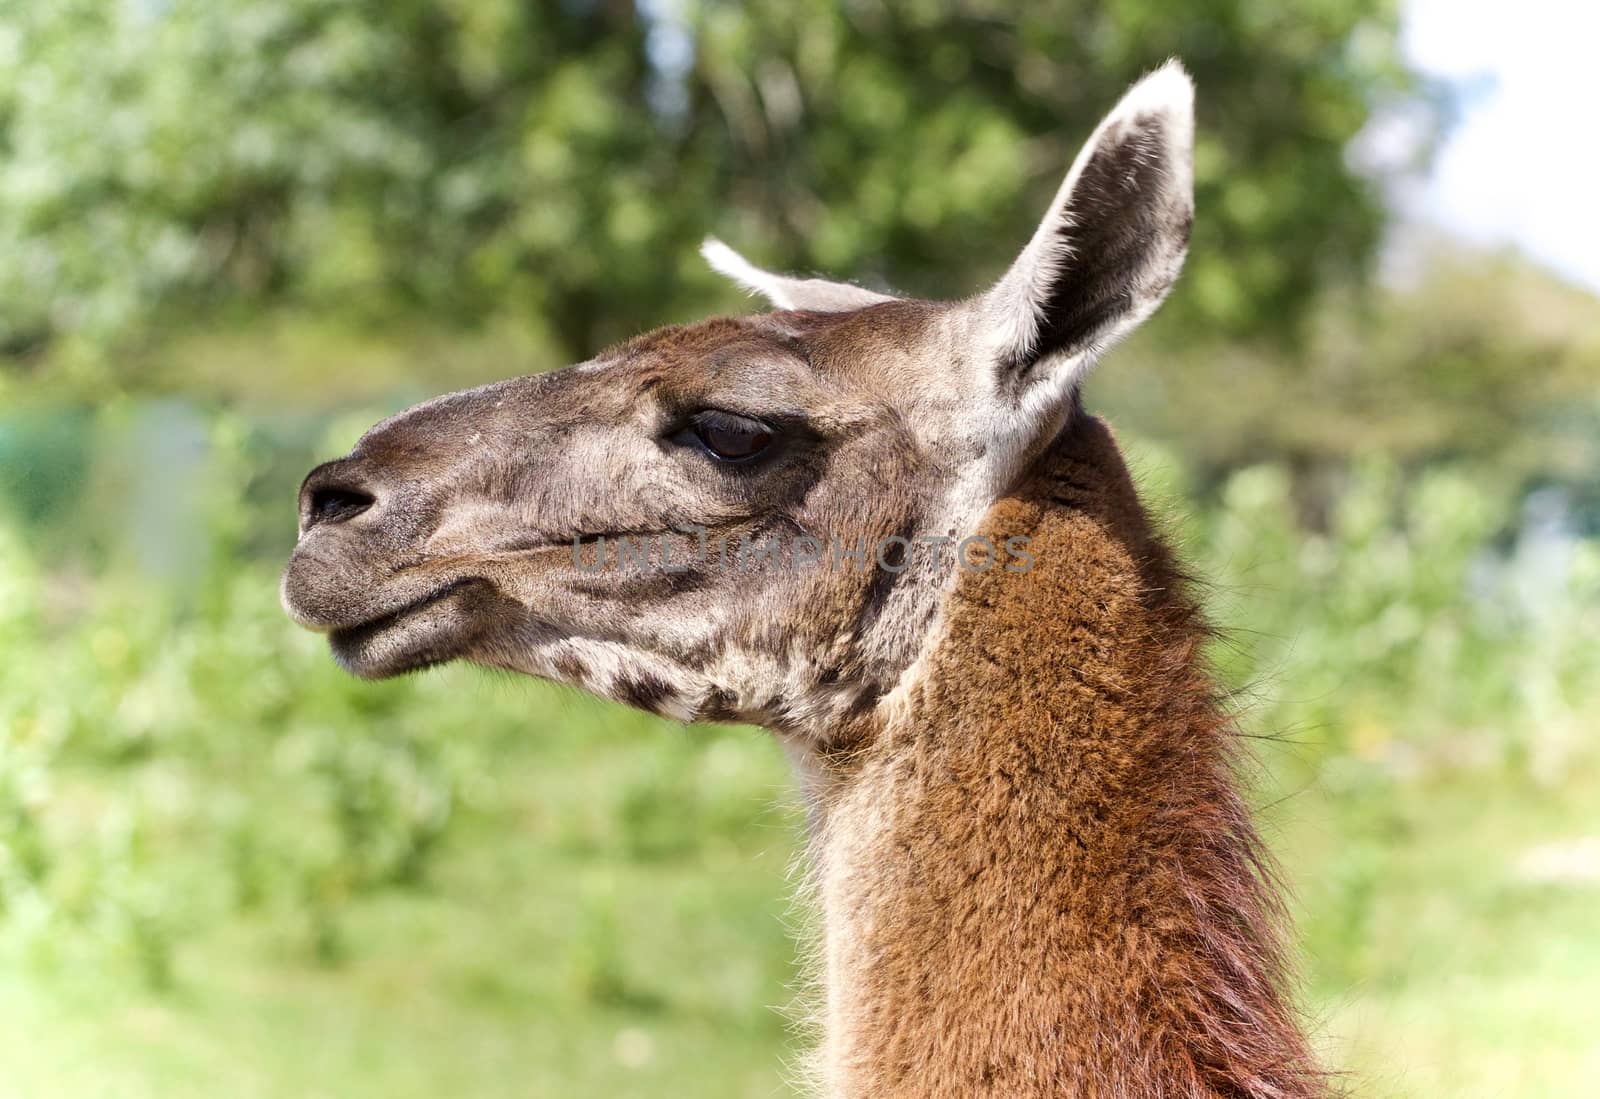 Photo of a llama standing awake on a field